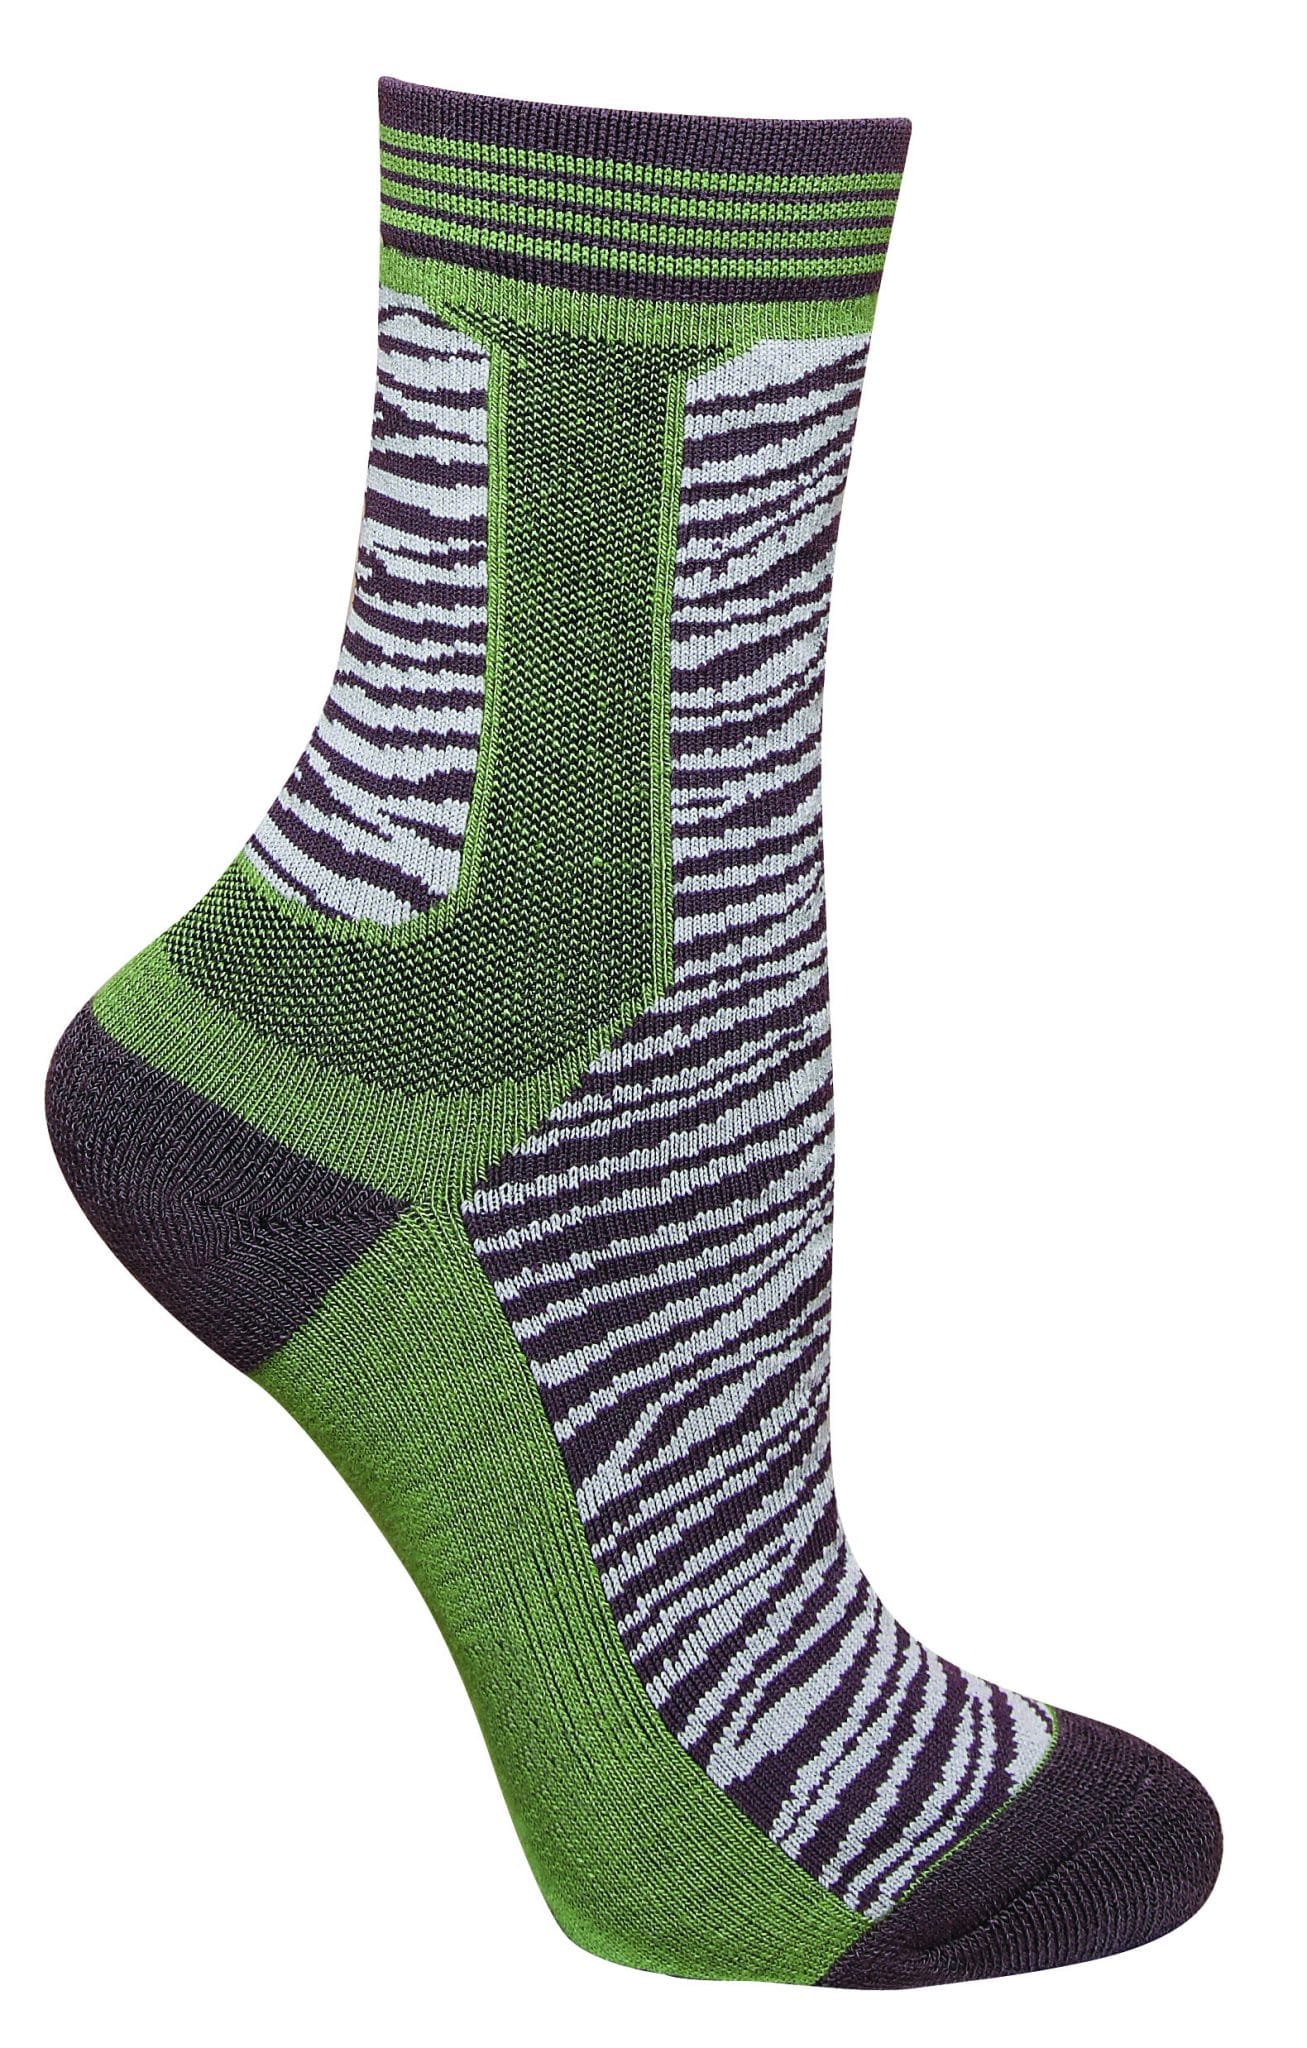 Green and Zebra coolmax socks